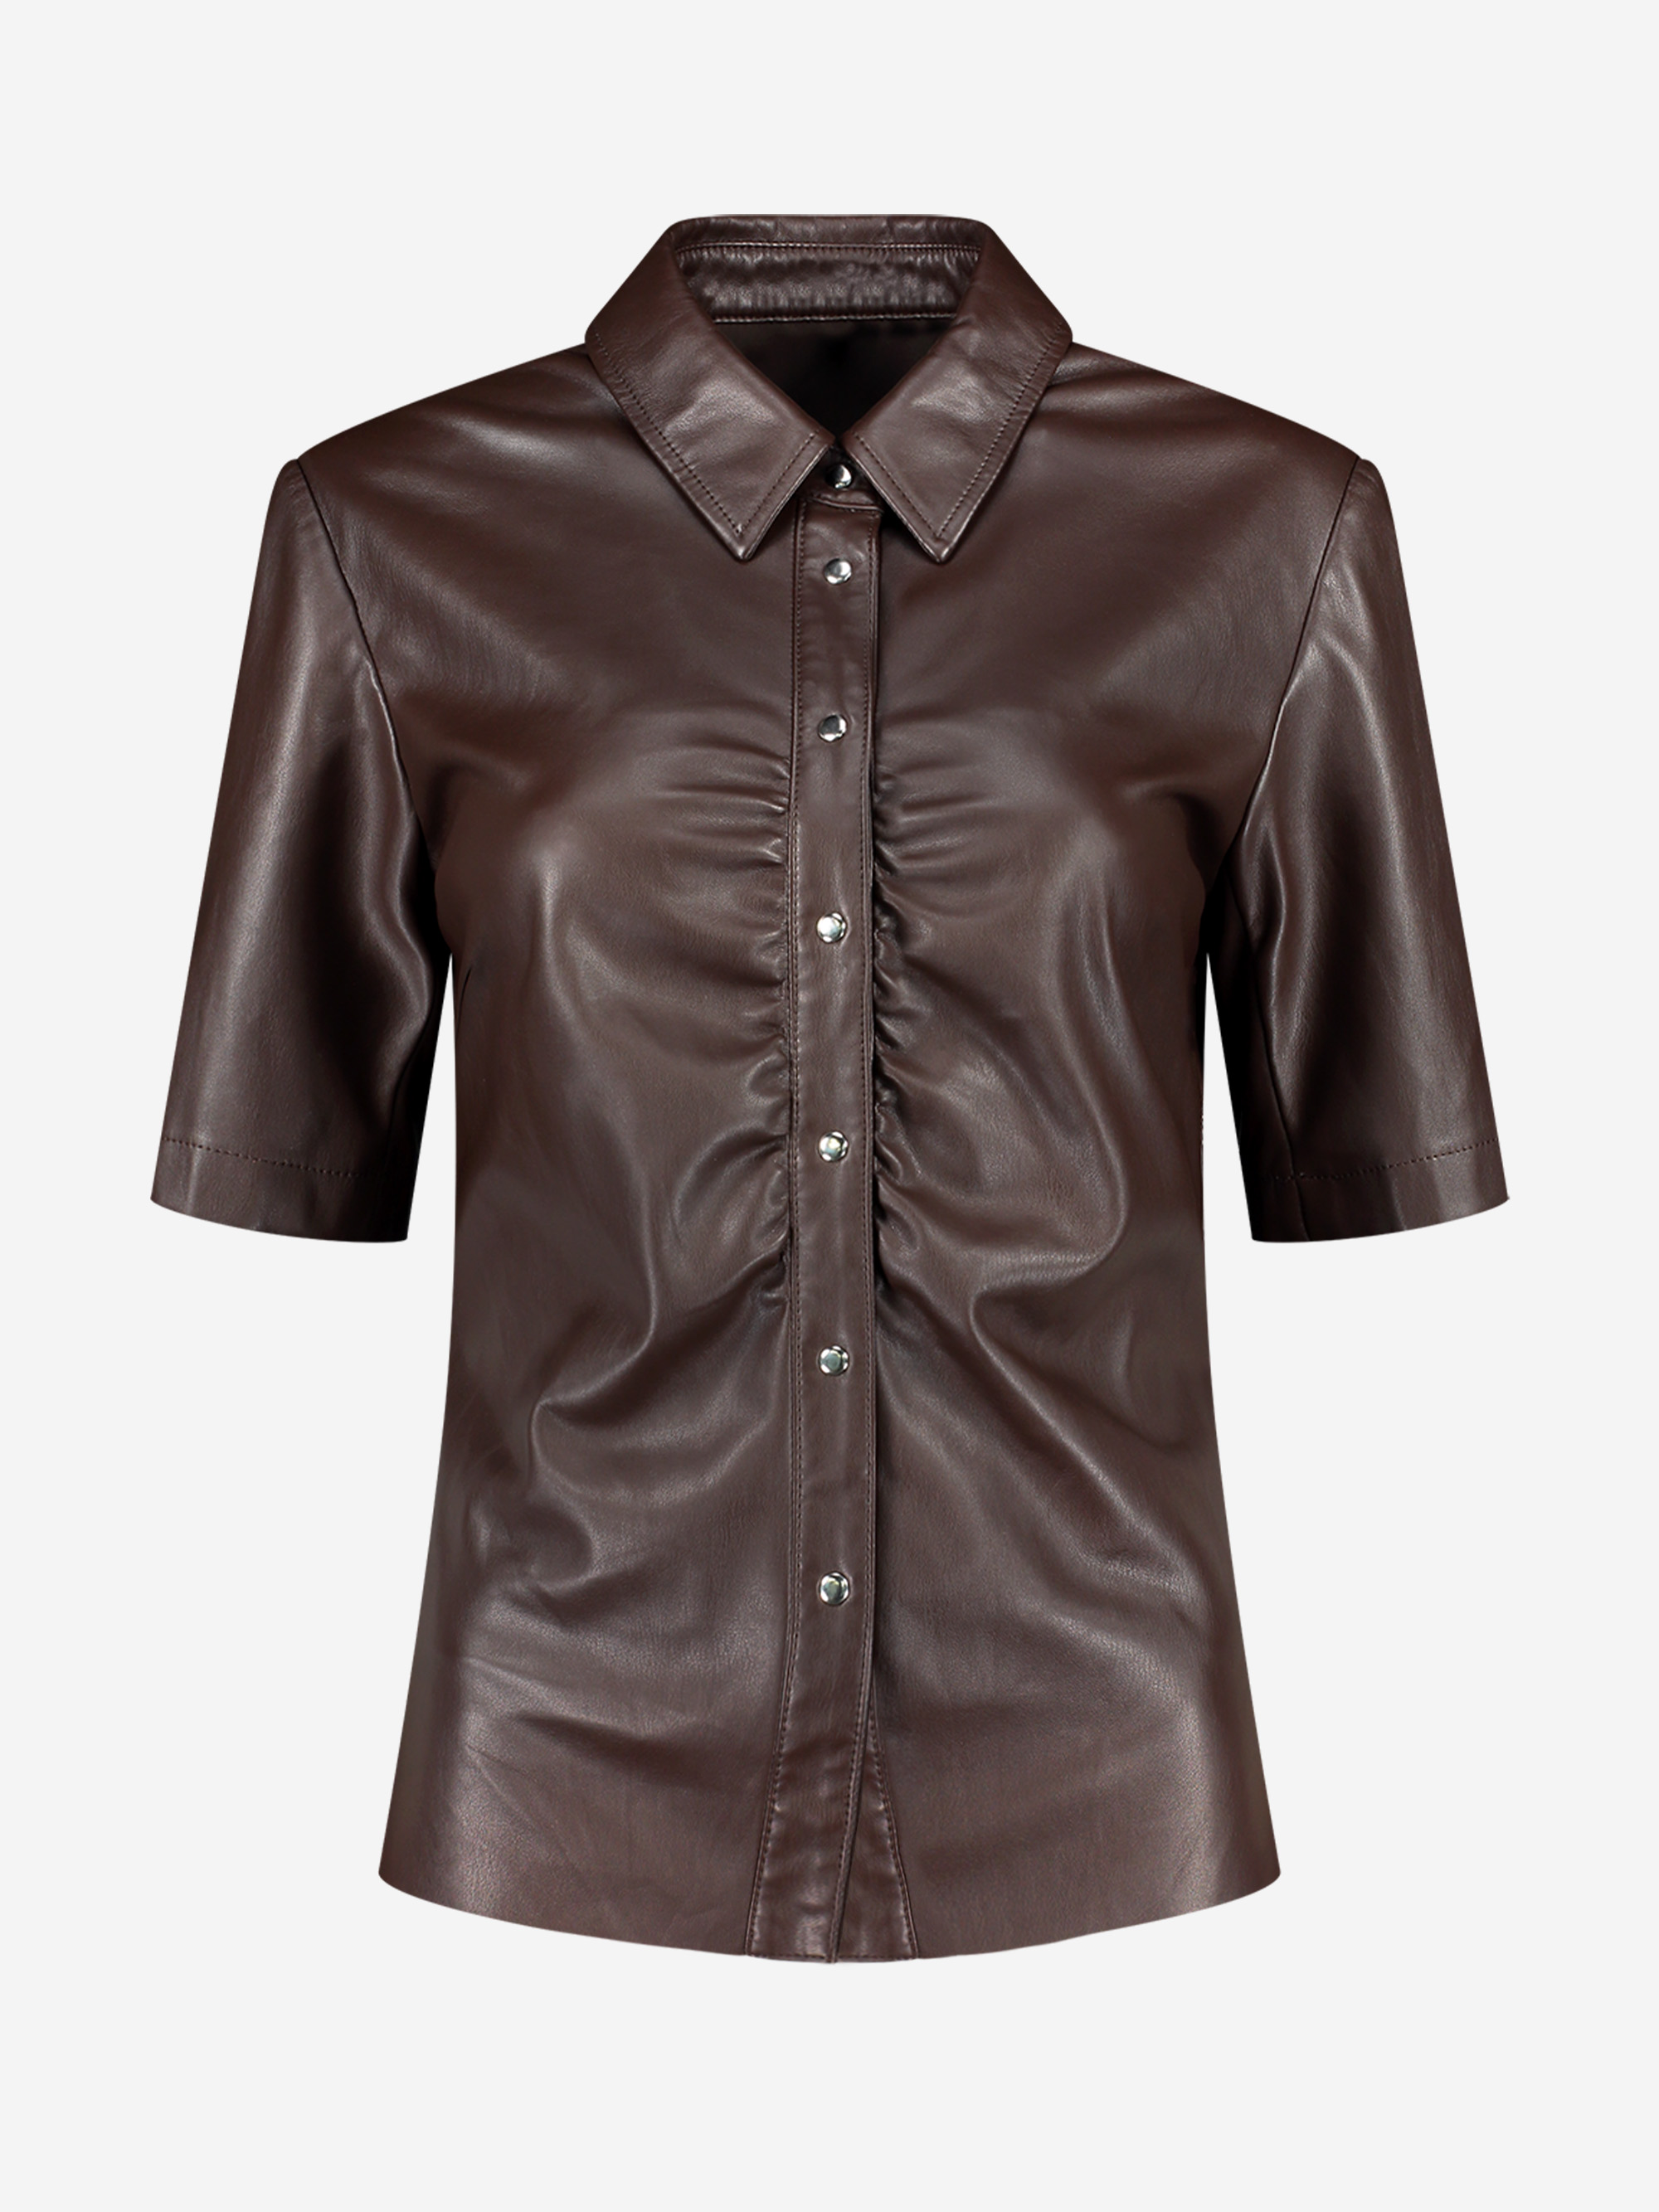 Vegan leather blouse